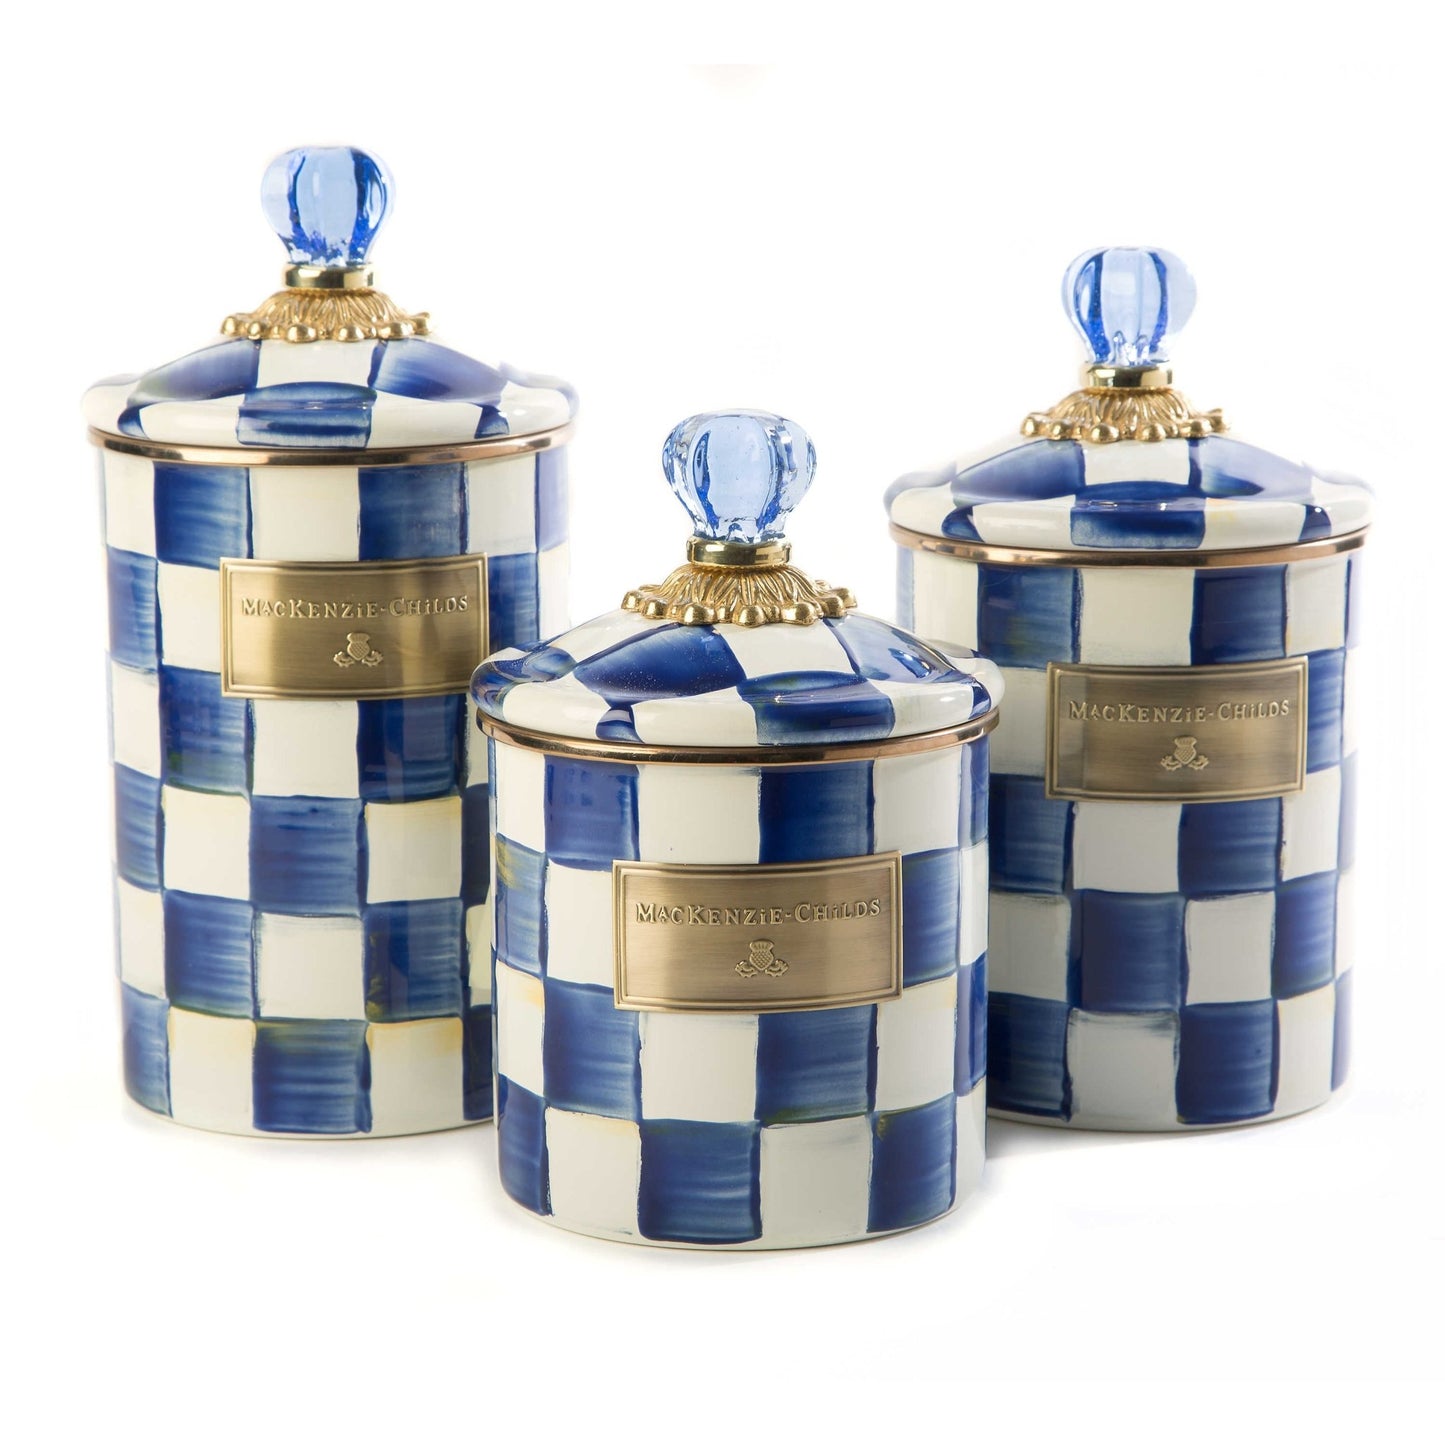 Royal Check Blue Handpainted Enamel Canister - Medium - |VESIMI Design| Luxury and Rustic bathrooms online